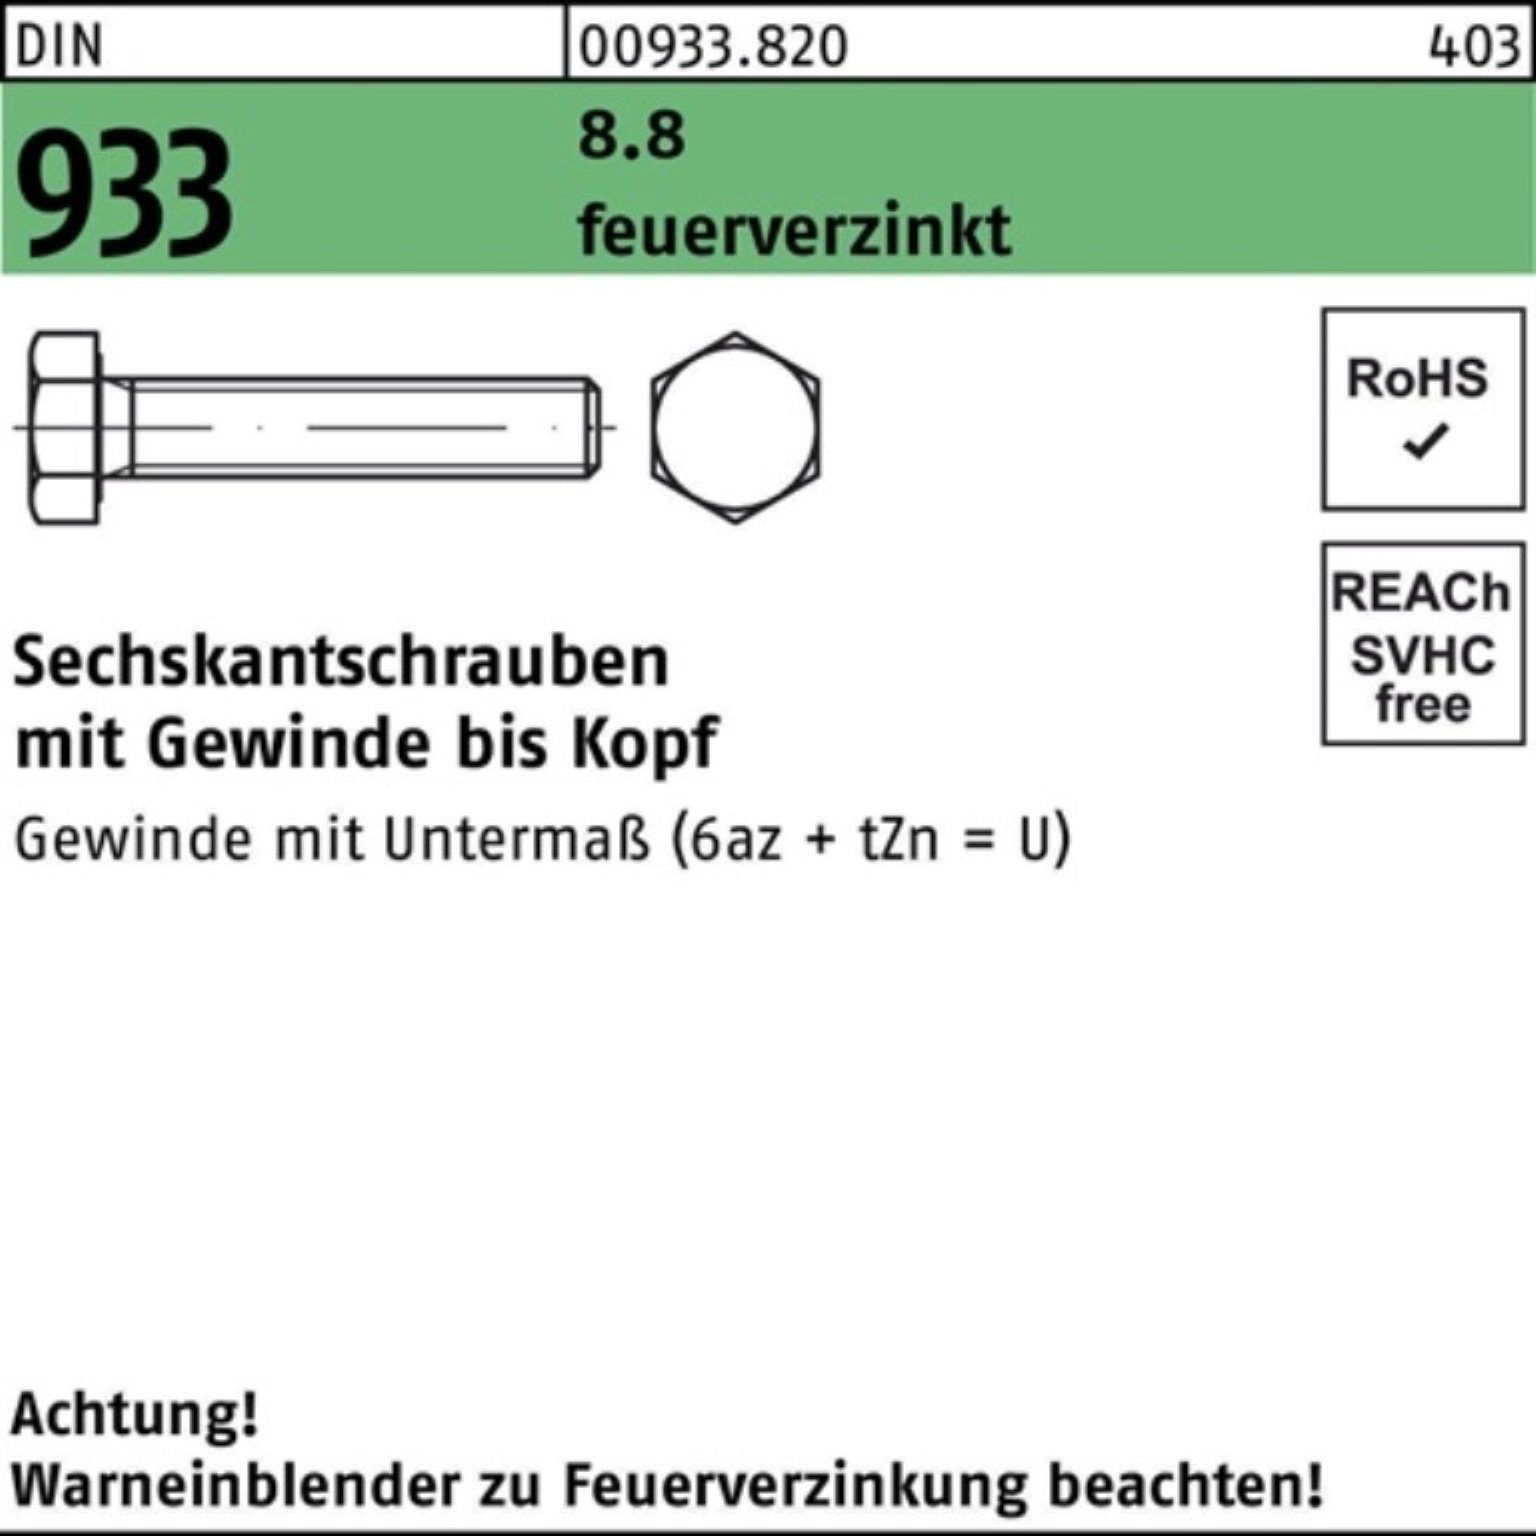 Sechskantschraube VG Sechskantschraube 40 8.8 50 DIN feuerverz. Pack M16x 933 Stü 100er Reyher